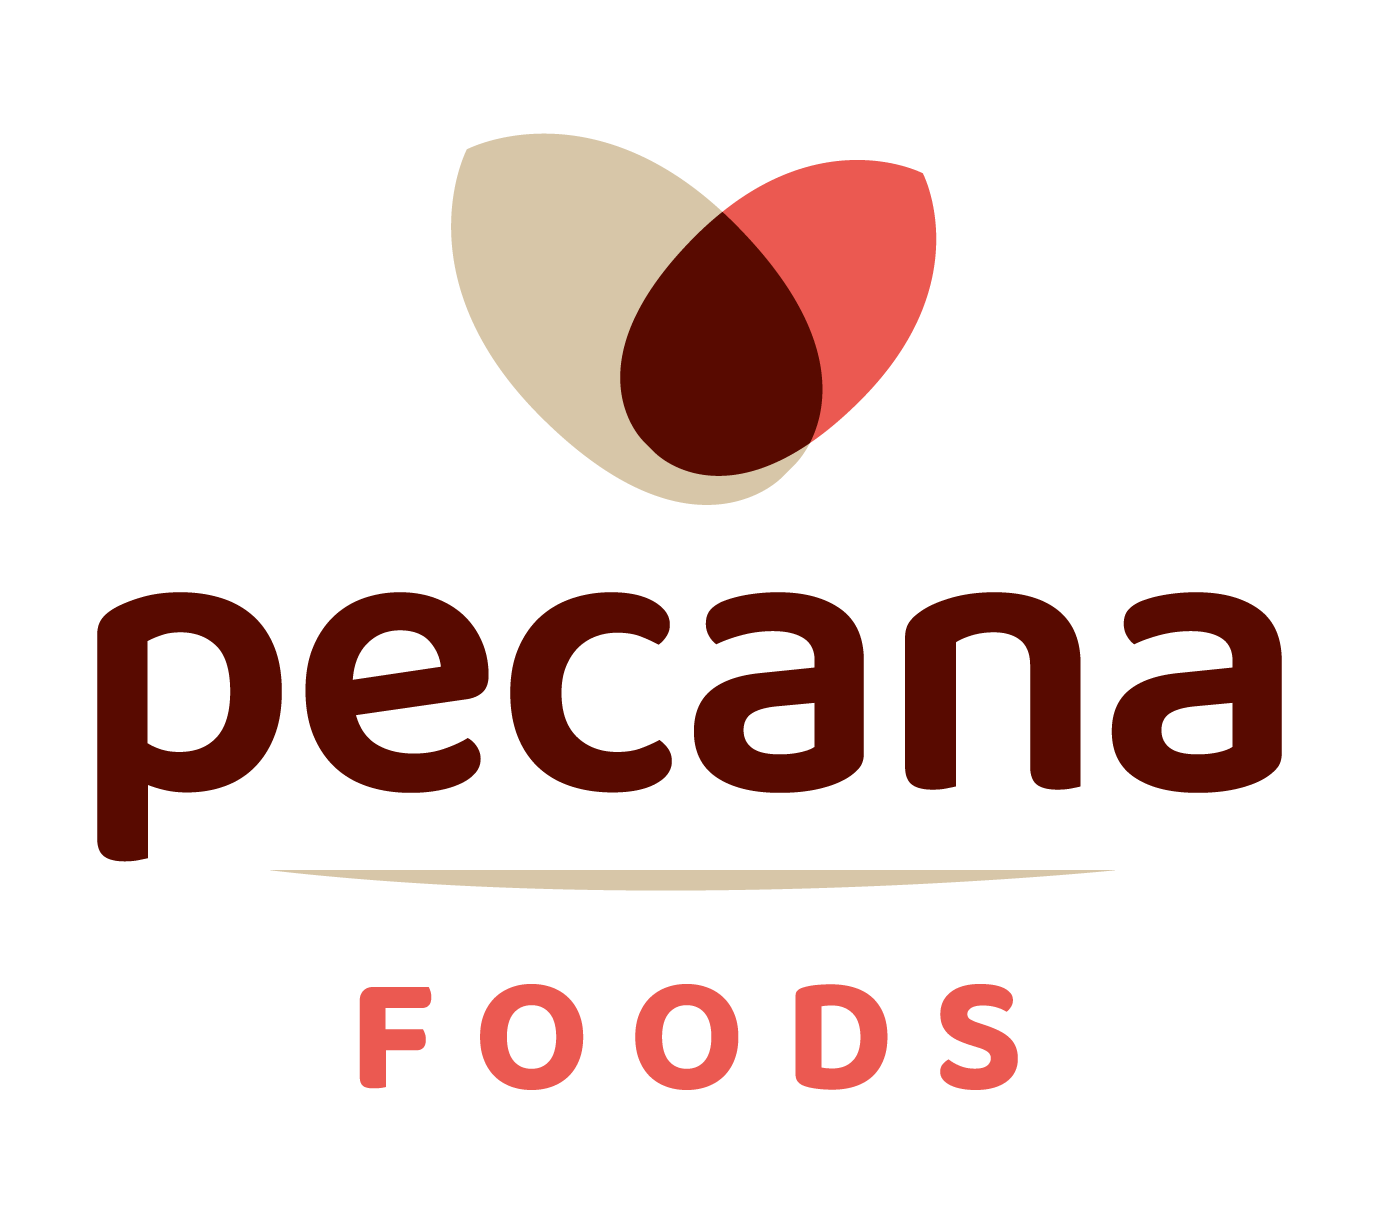 Pecana foods